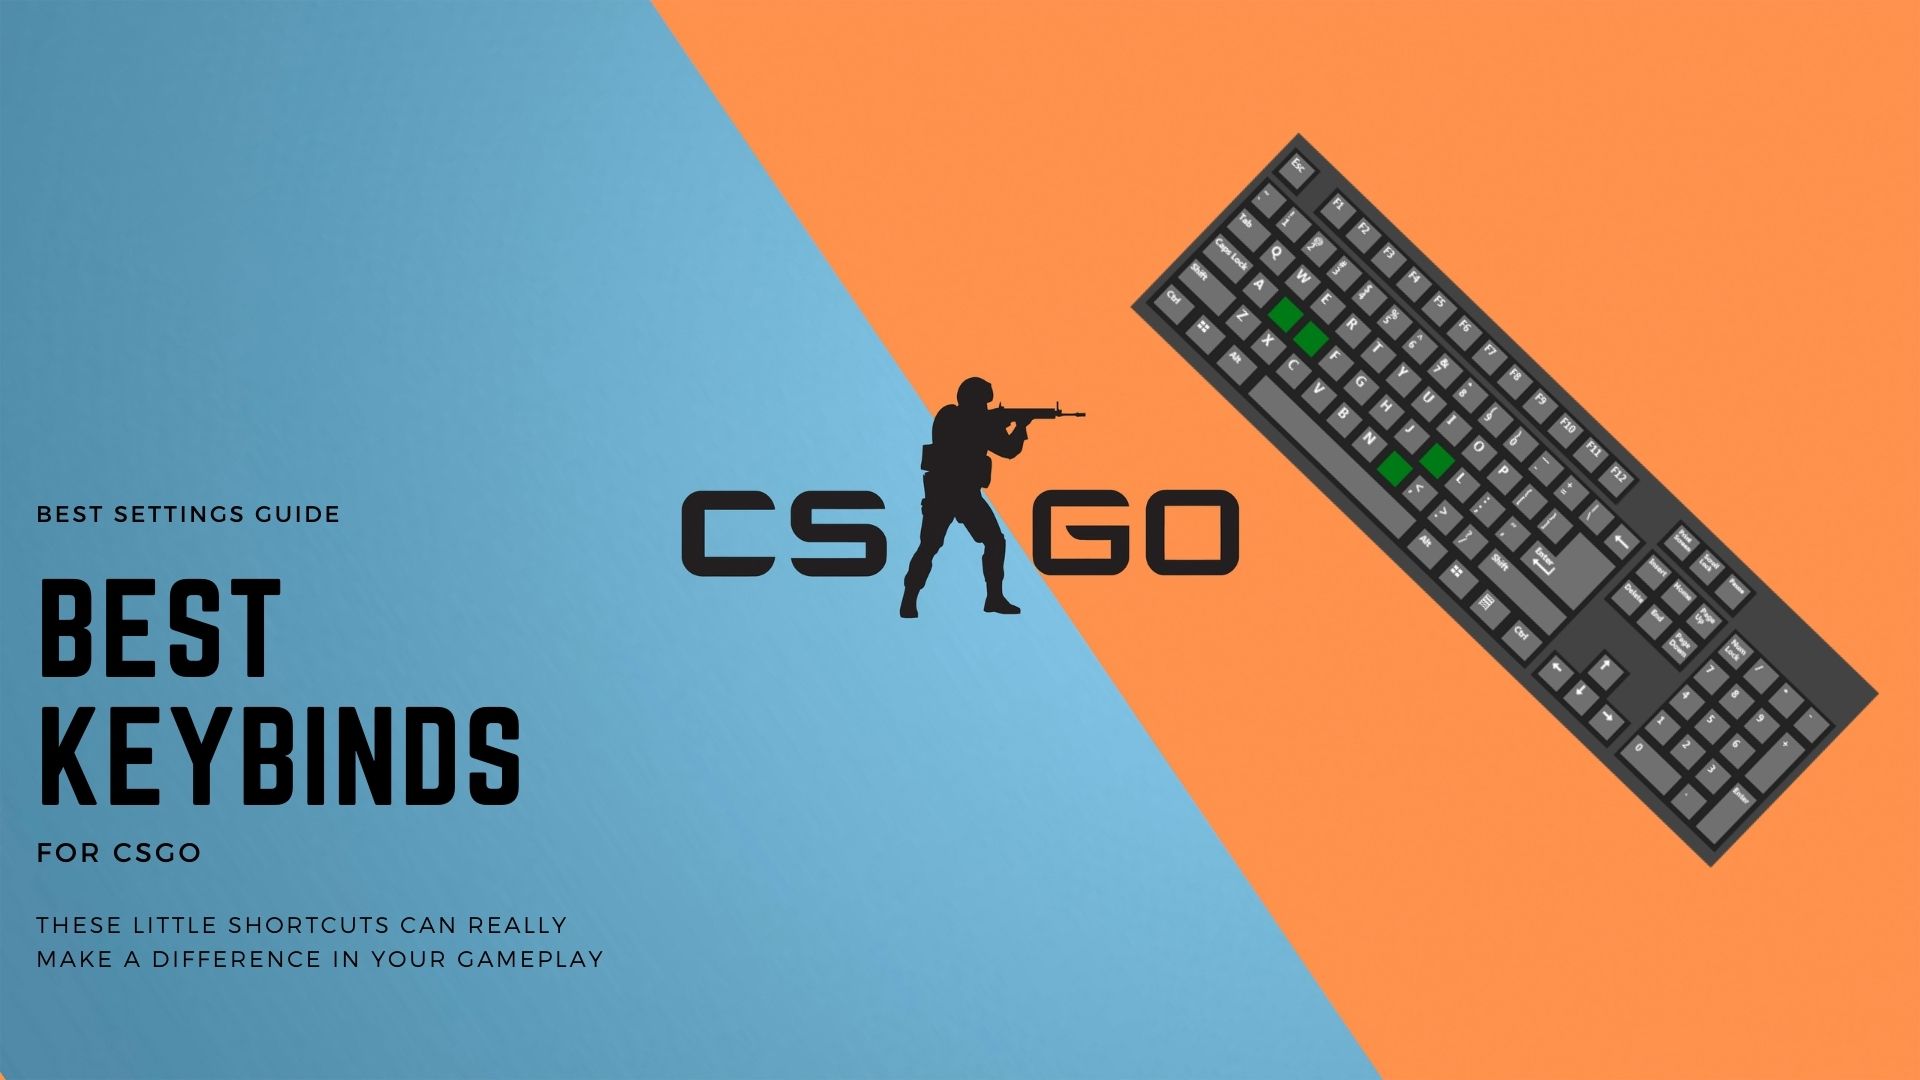 Keybinds for CSGO